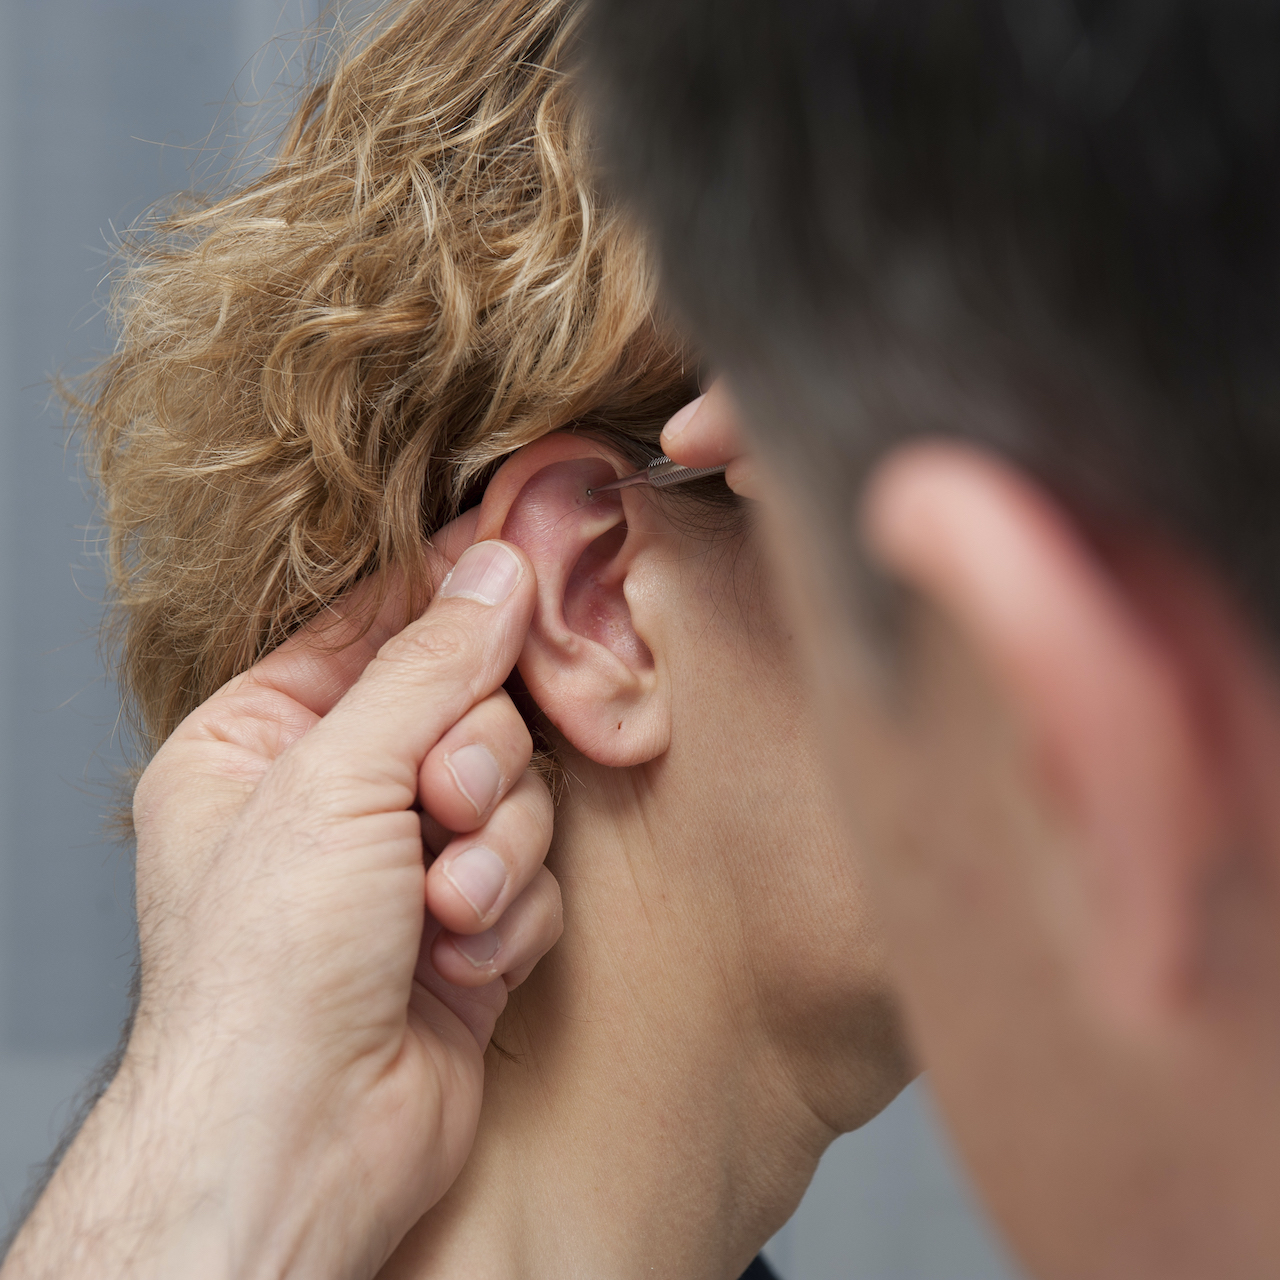 Ear Reflex Zone Therapy